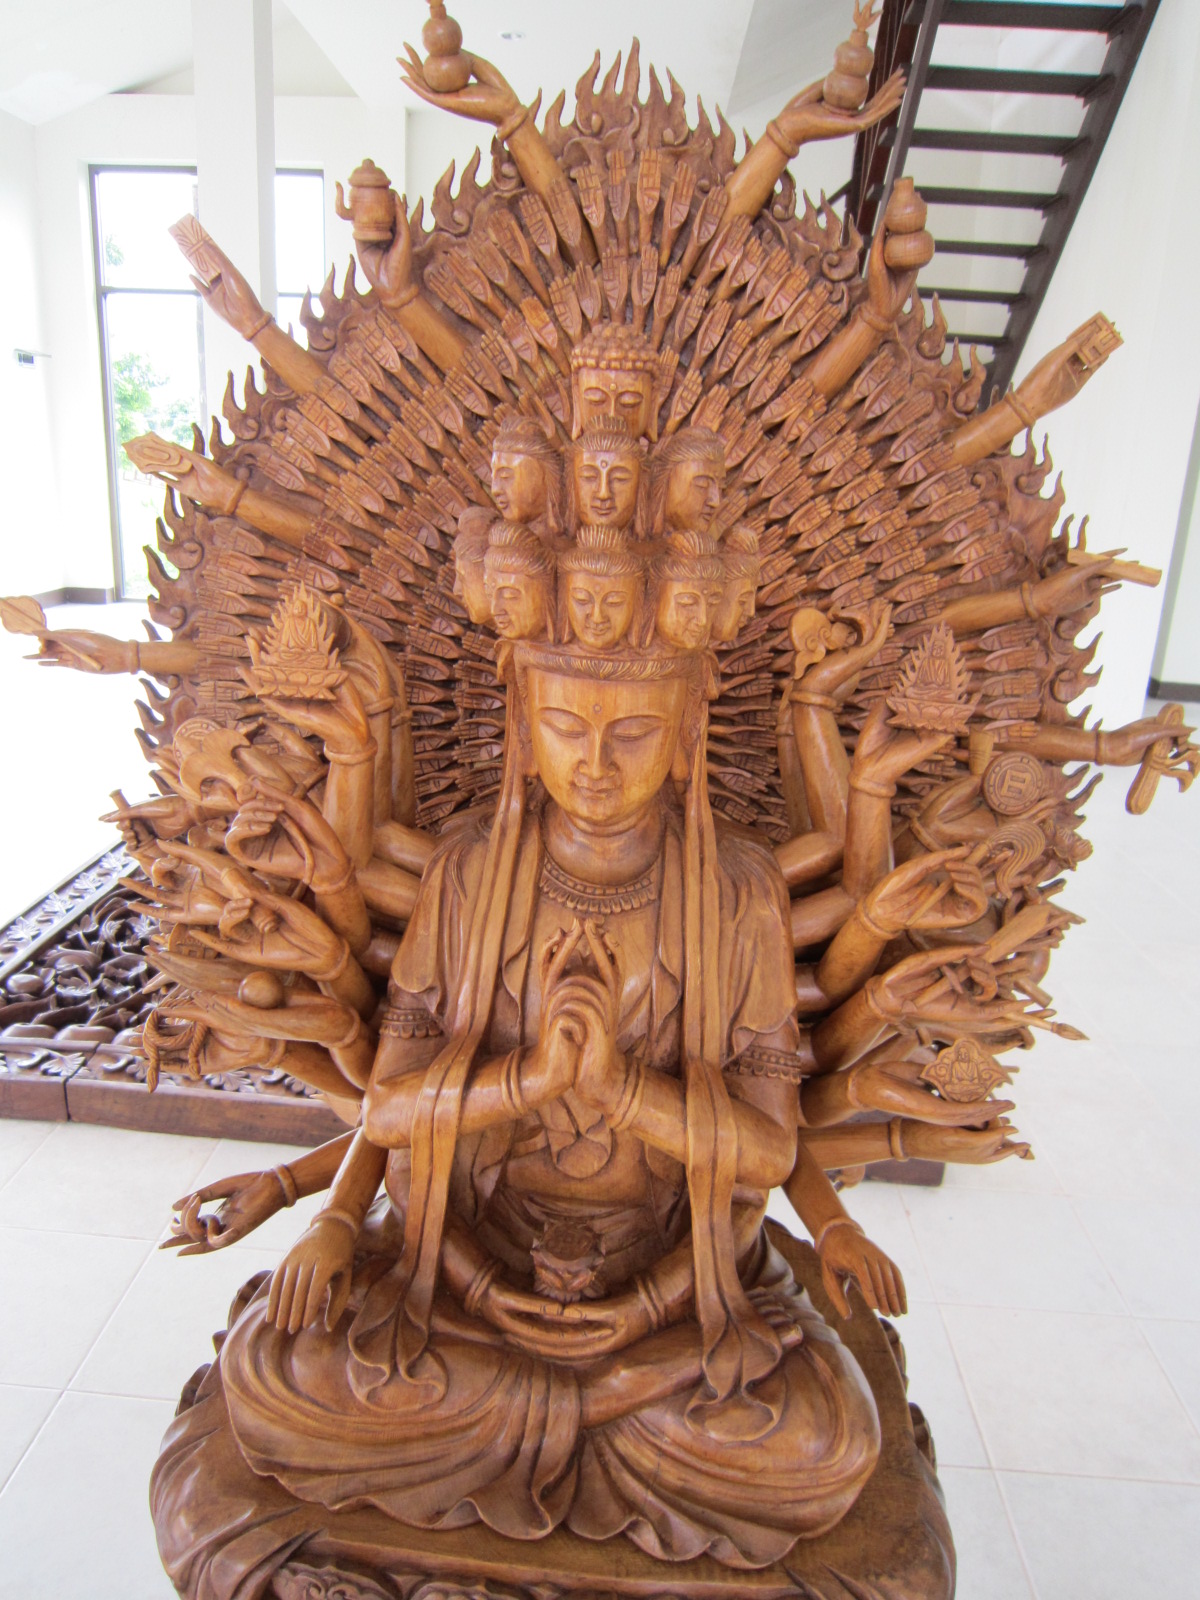 Avaloketeshvara 1000 Arms God of Compassion